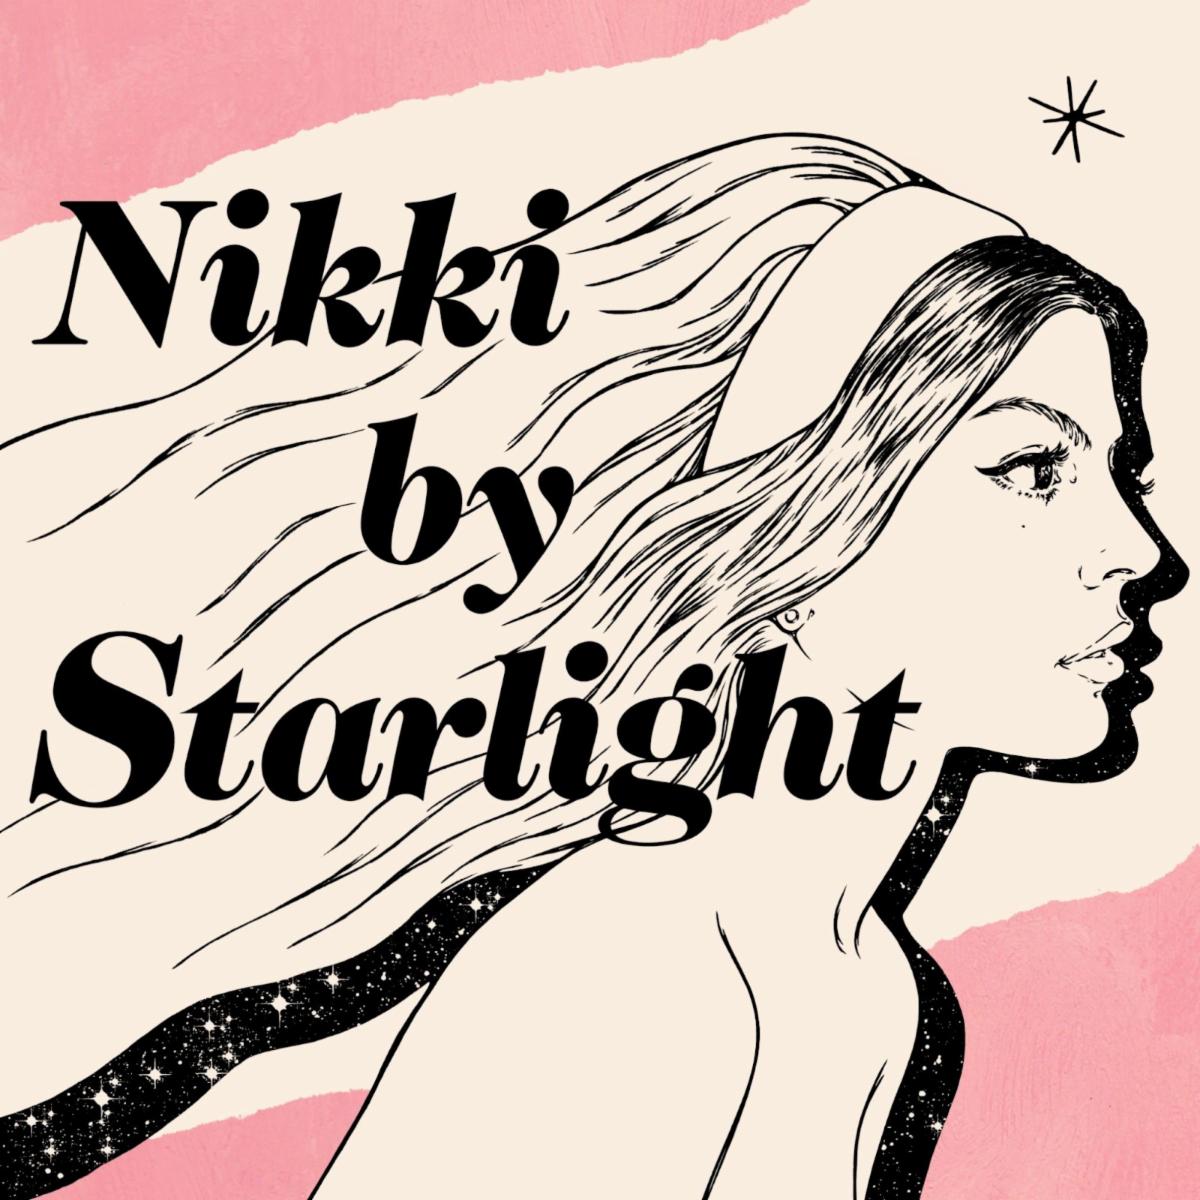 Album cover of "Nikki by Starlight"; illustrated version of Nikki Yanofsky.